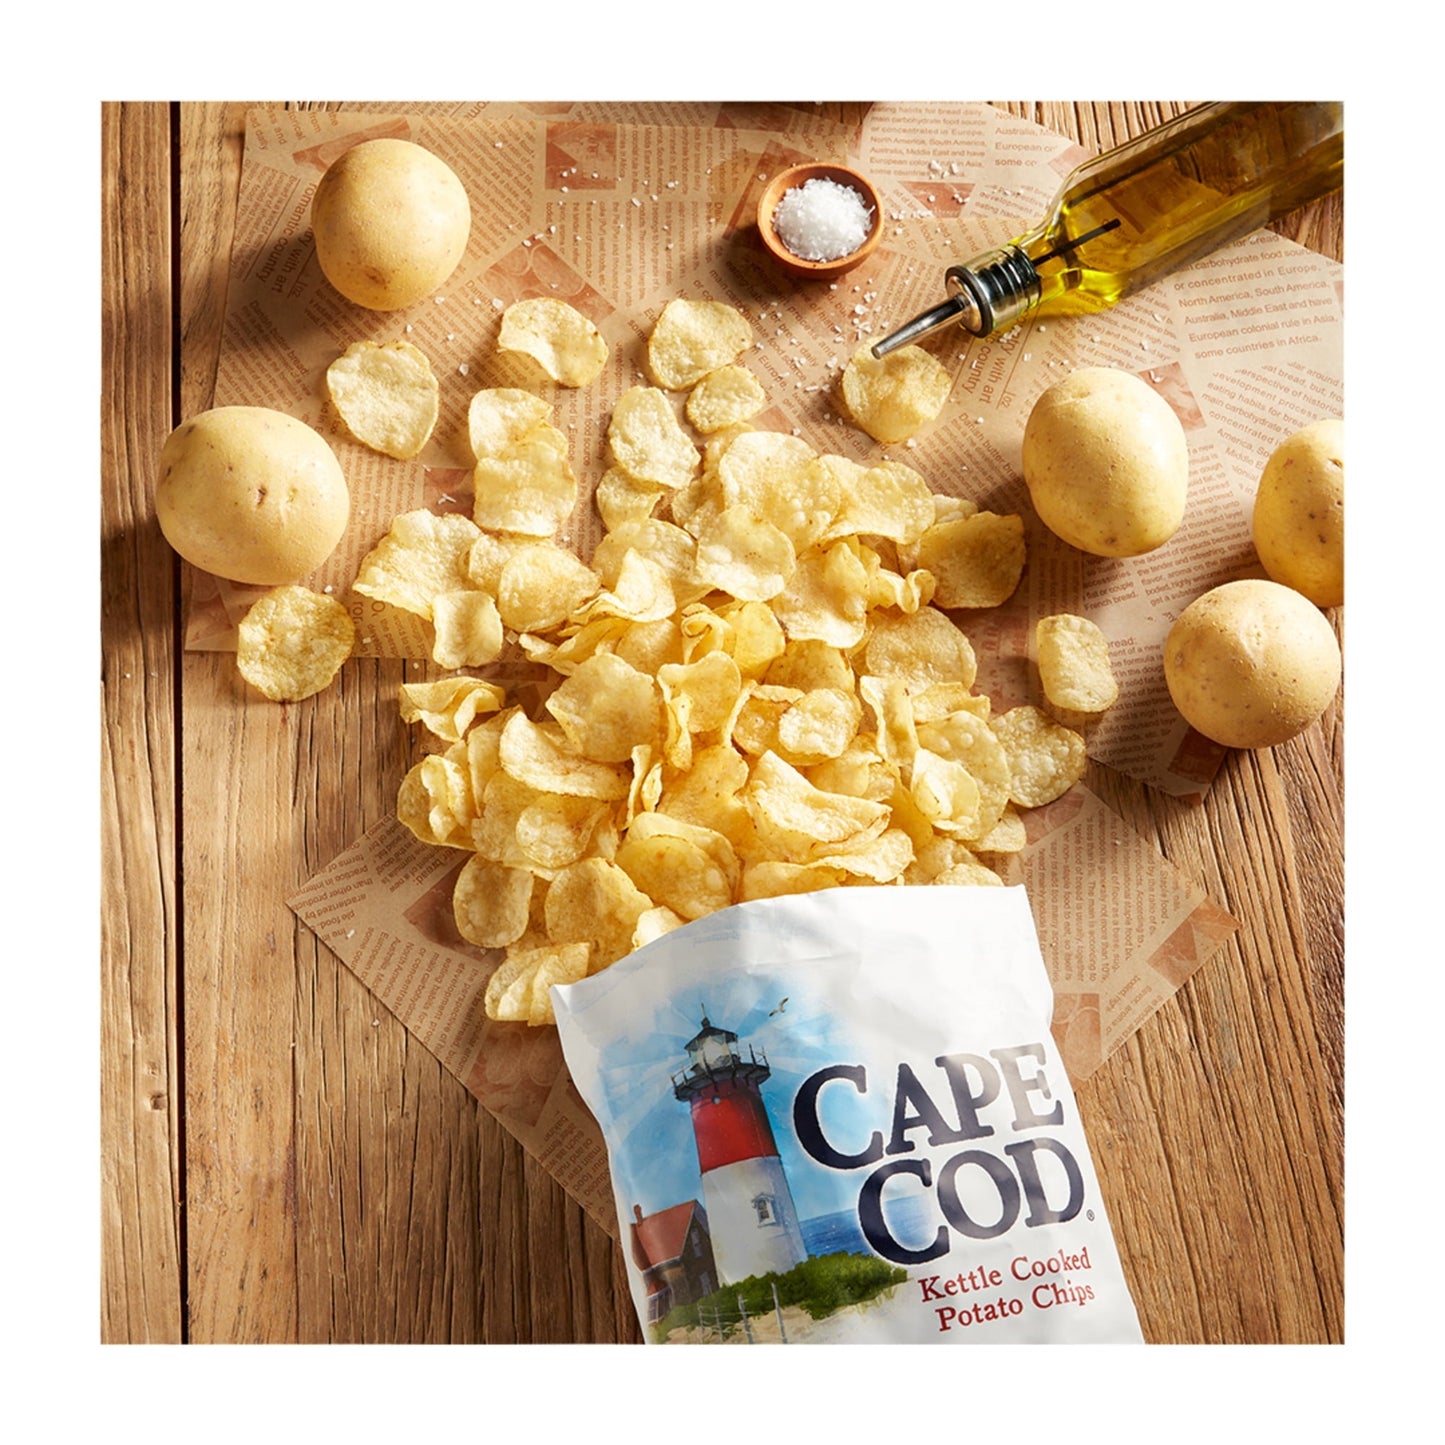 Cape Cod Potato Chips, Original Kettle Cooked Chips, 8 oz